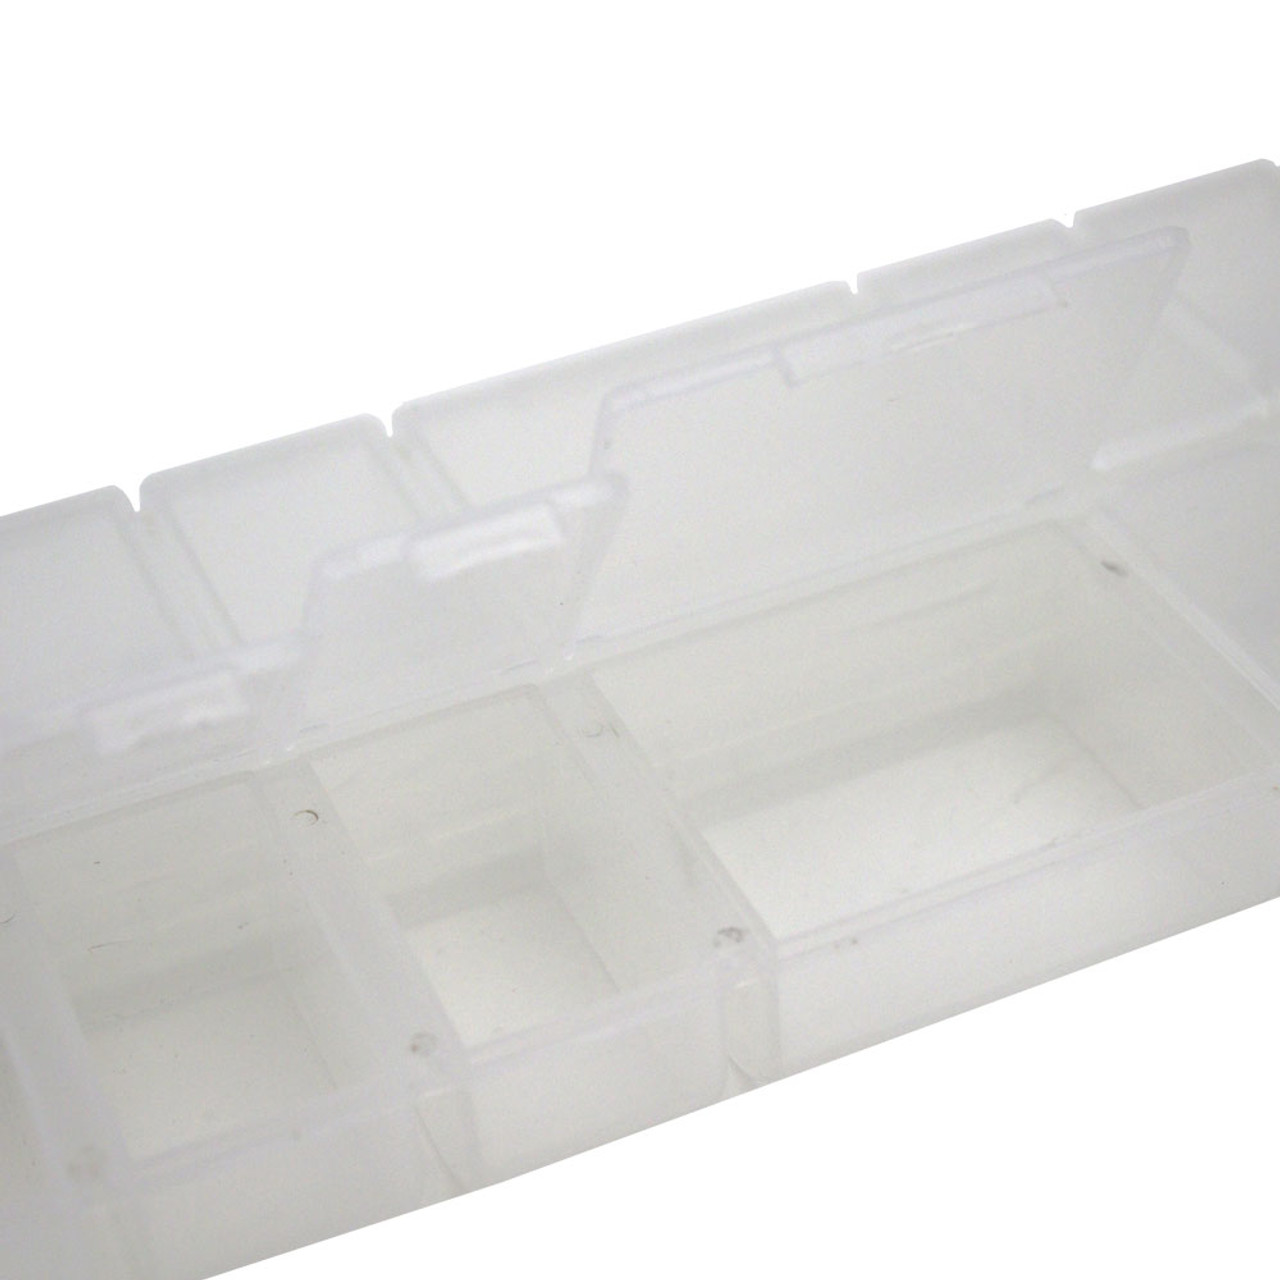 Plastic Organizer Box with 10 Compartments